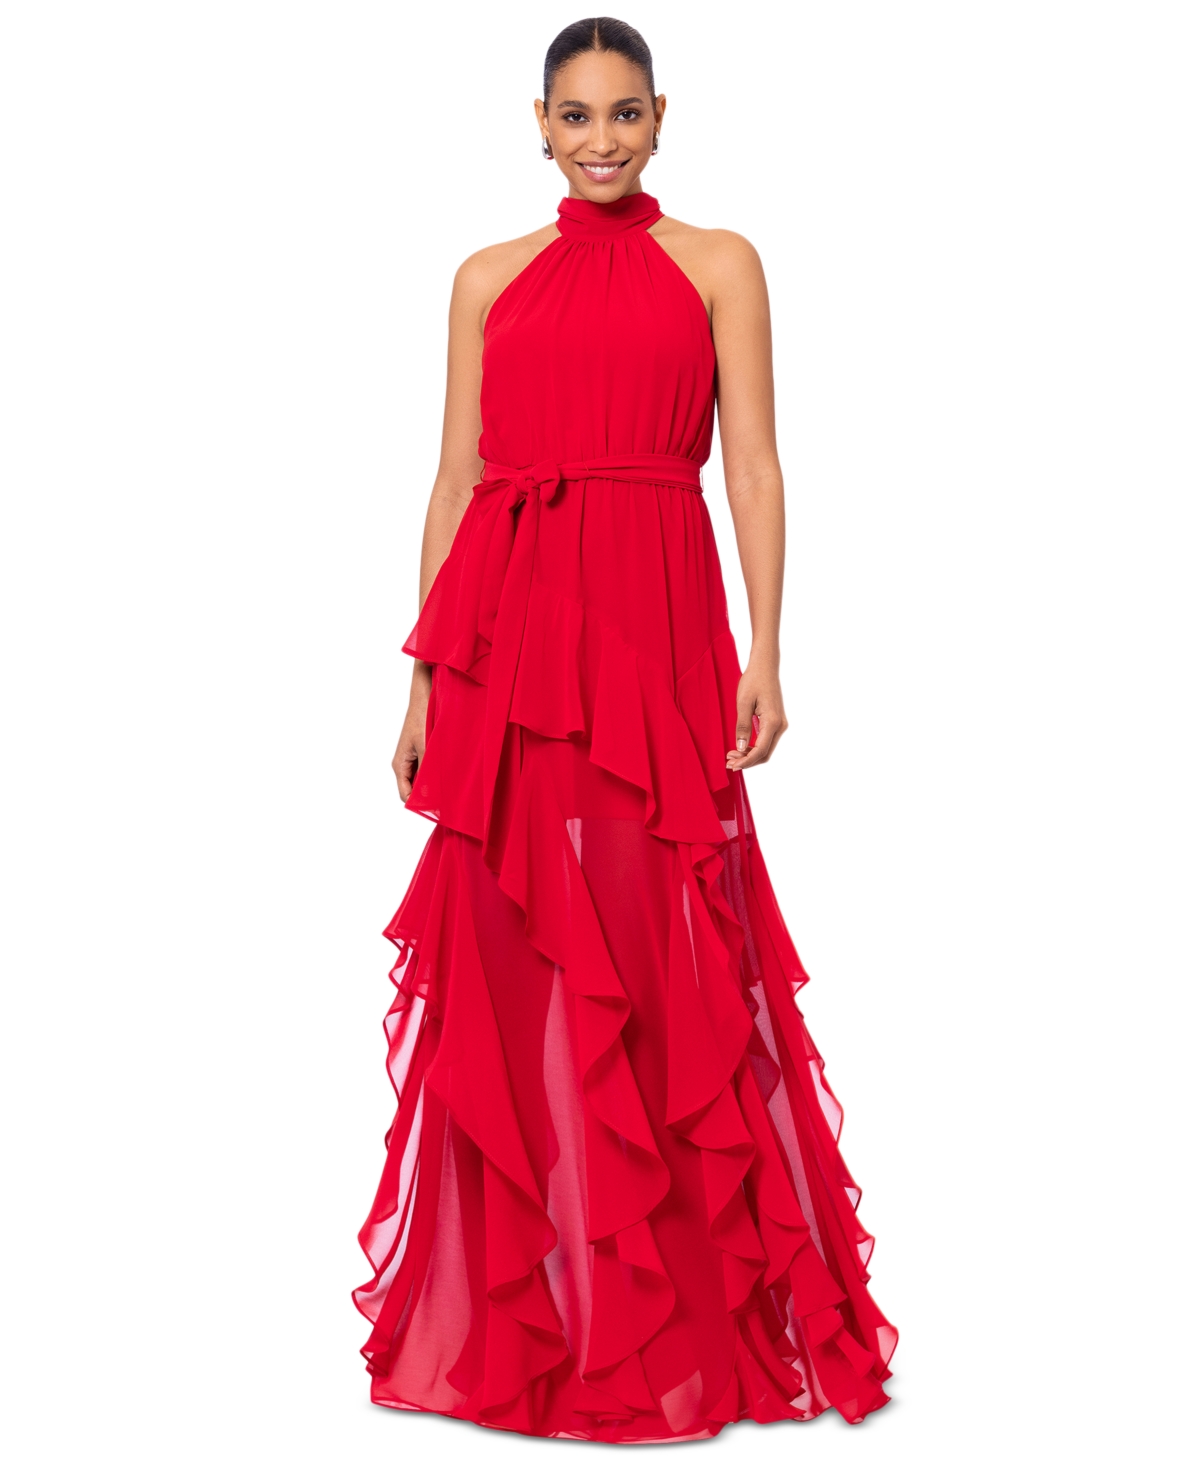 Women's Ruffled Halter Gown - Red